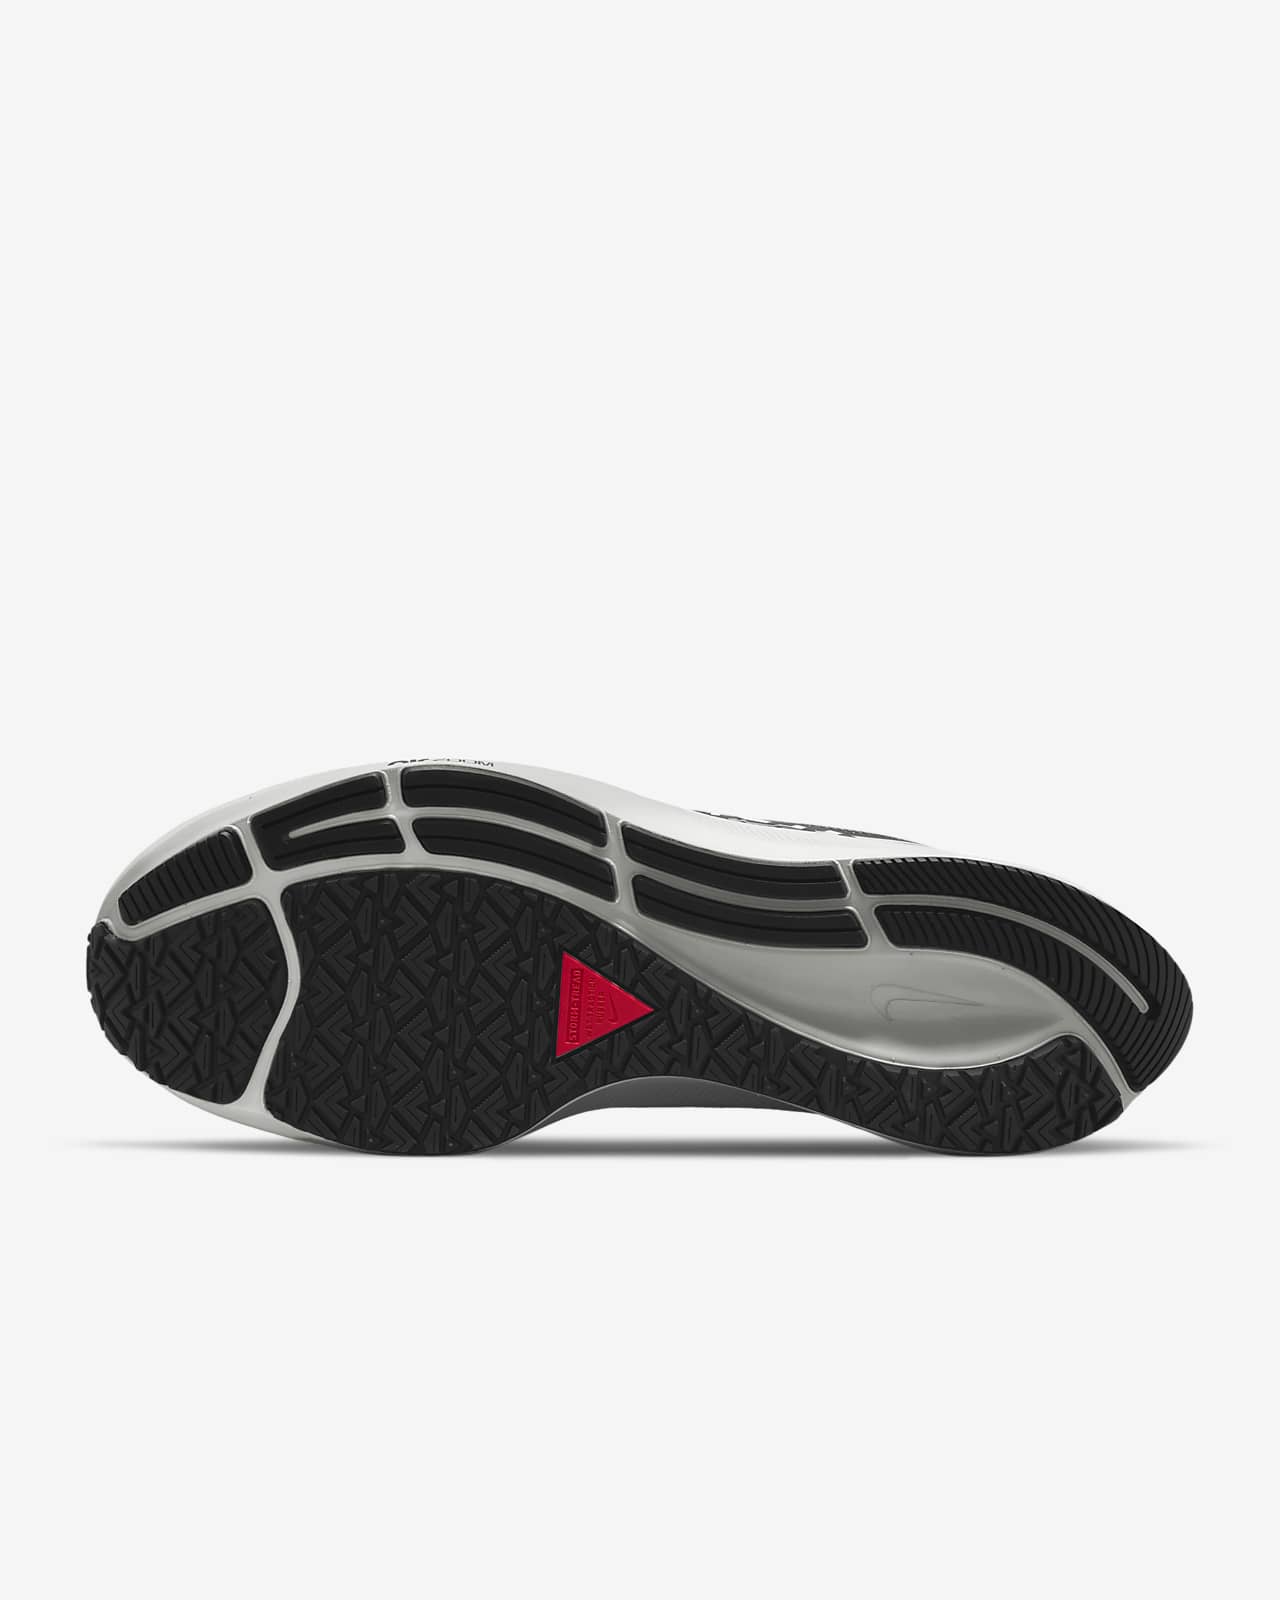 Nike Pegasus 38 Shield Men's Weatherized Road Running Shoes.